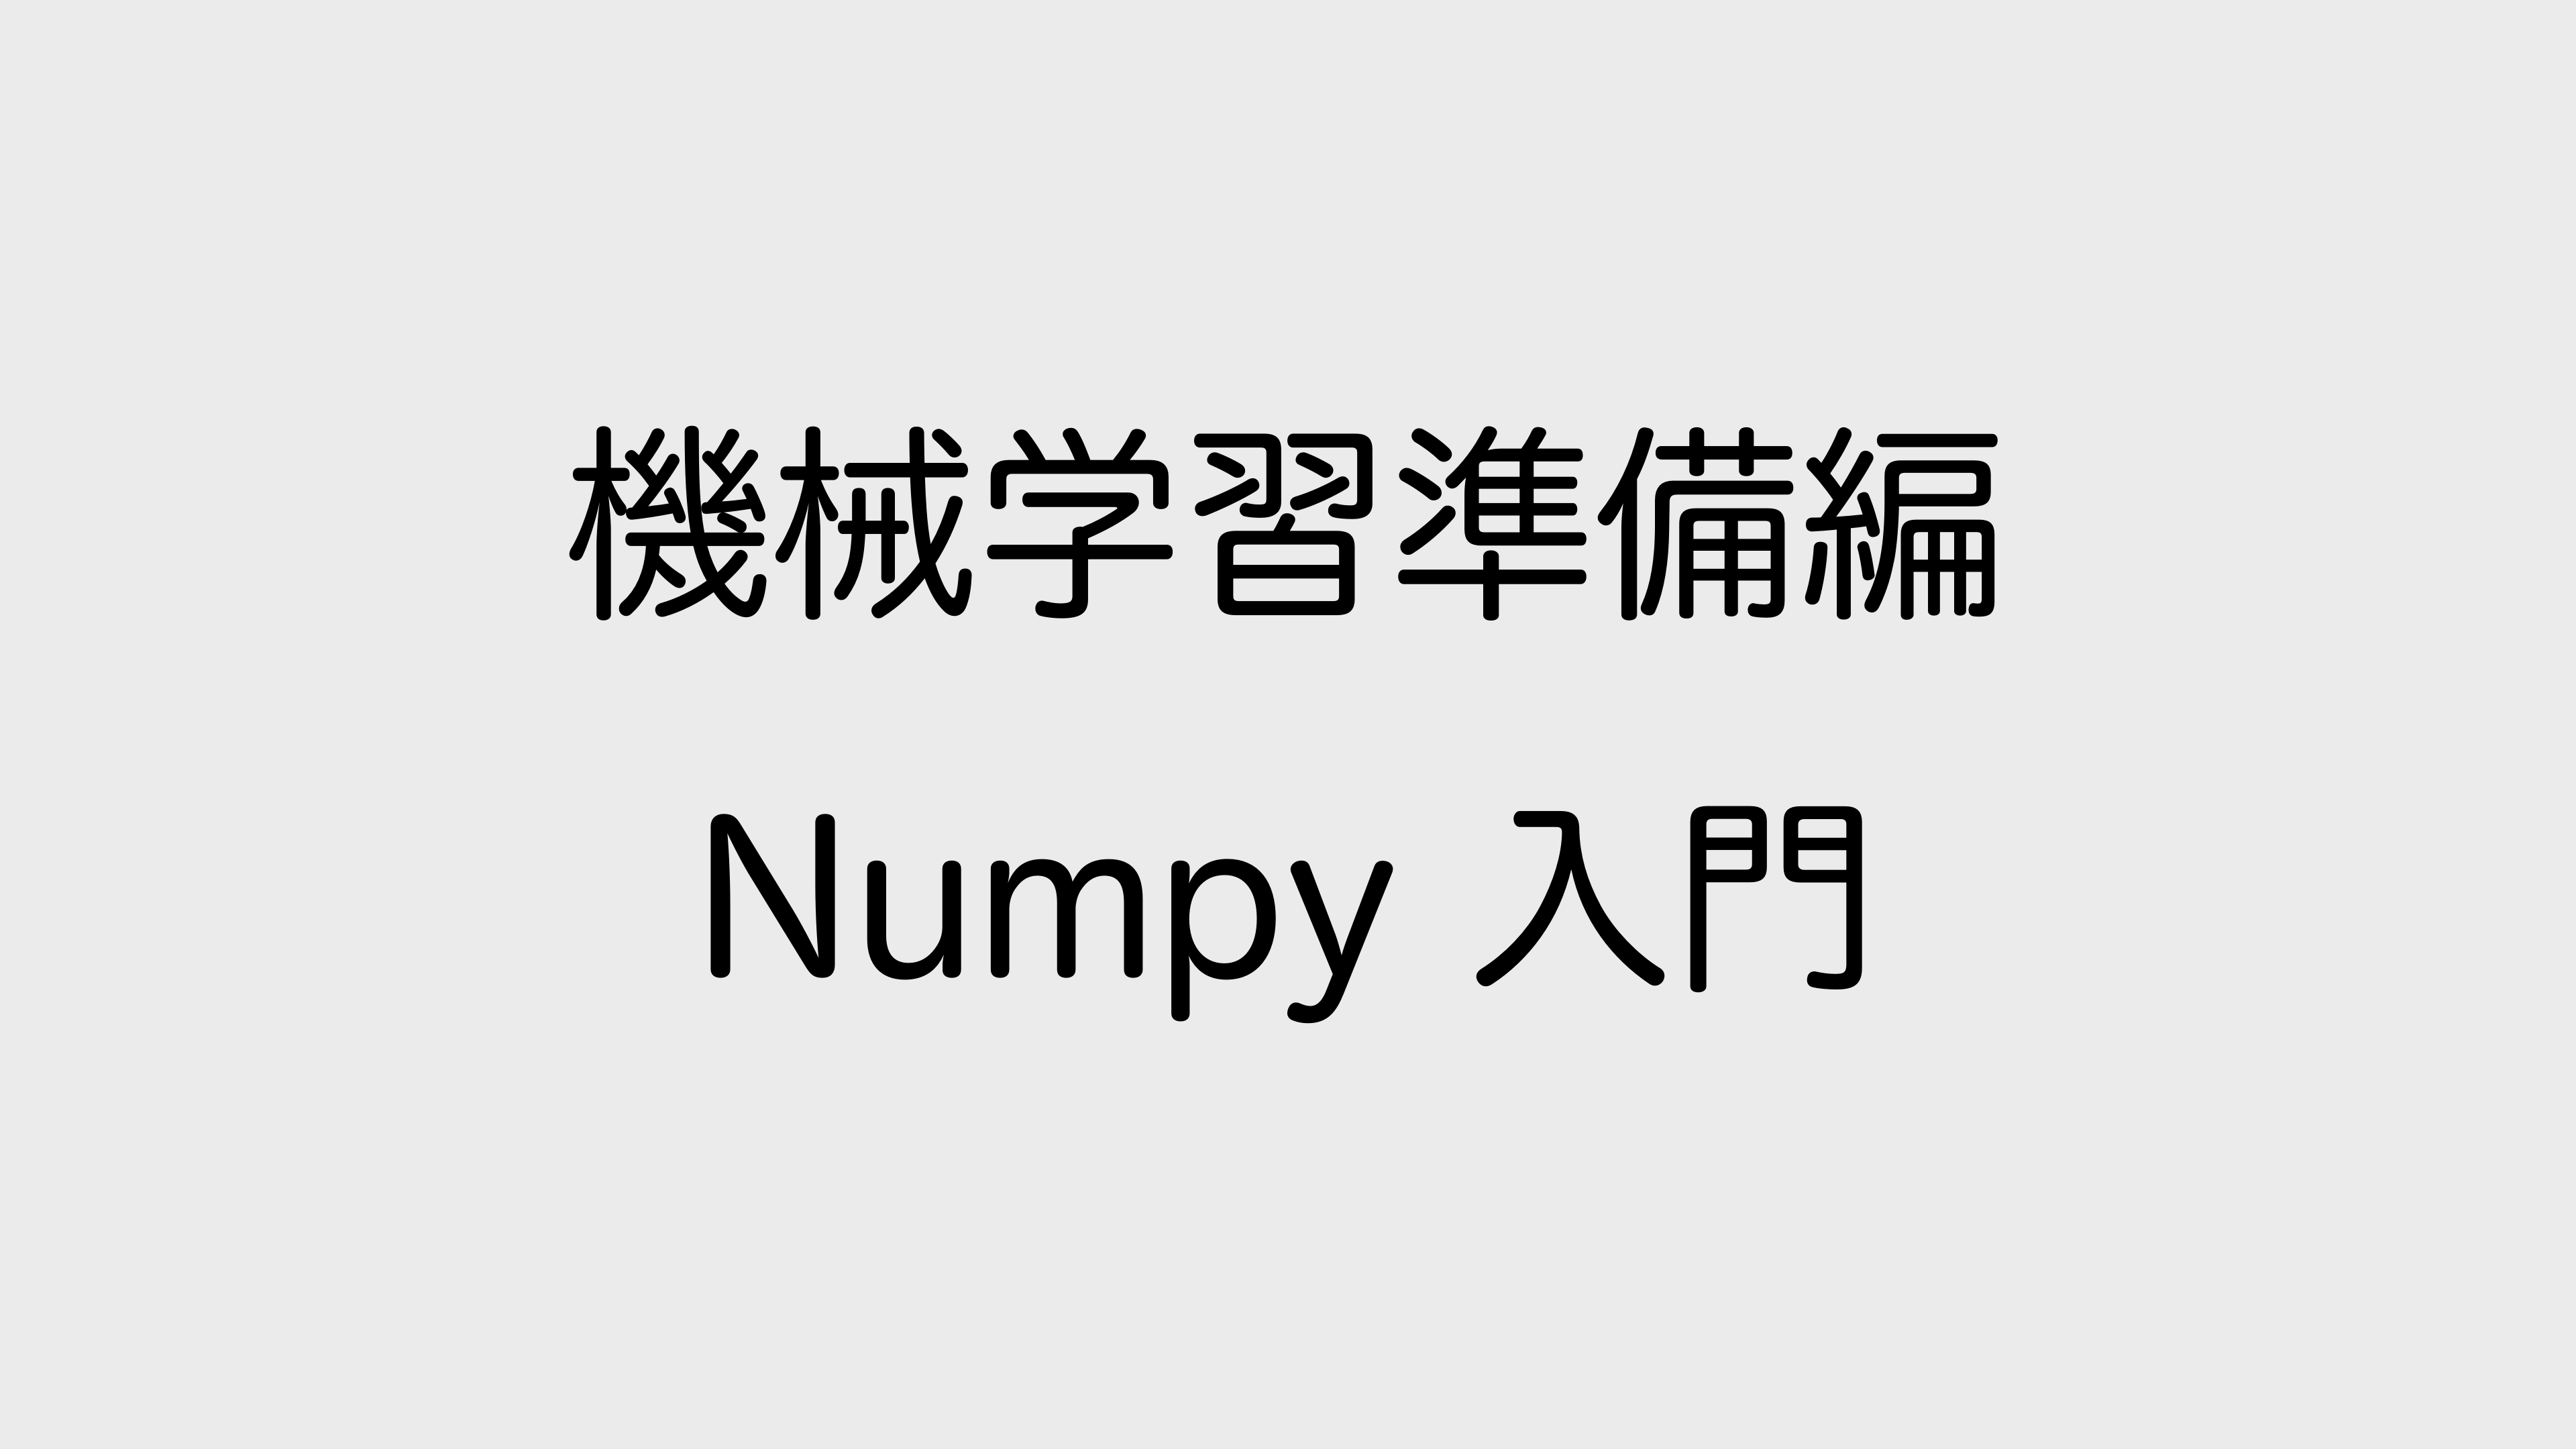 Numpy 入門コース